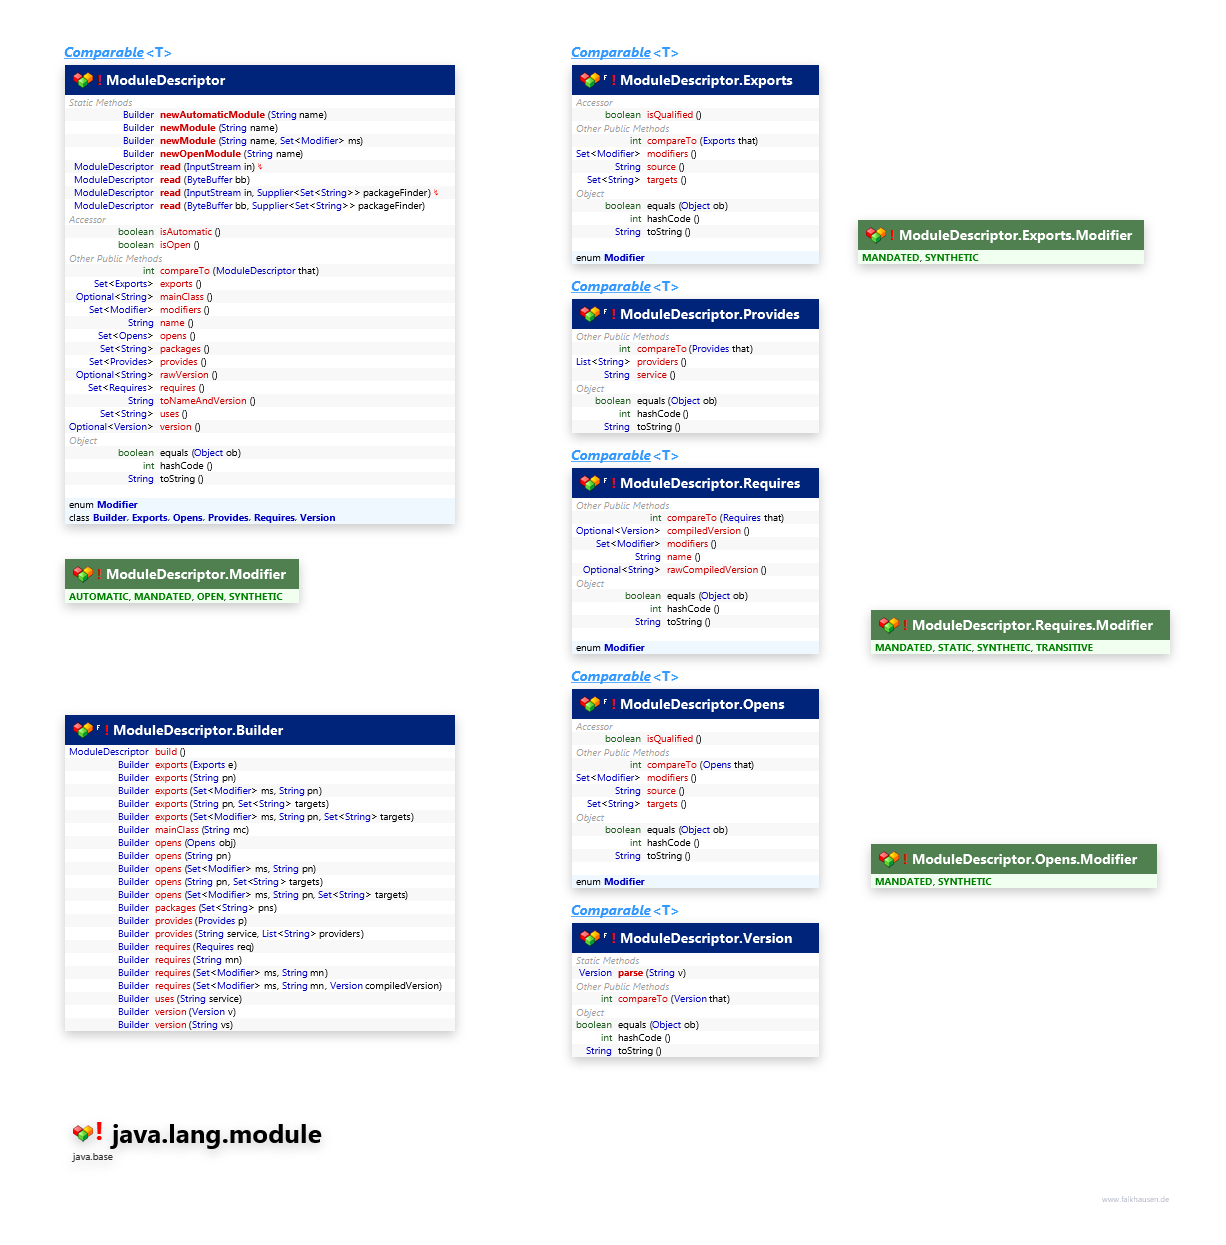 java.lang.module ModuleDescriptor class diagram and api documentation for Java 10